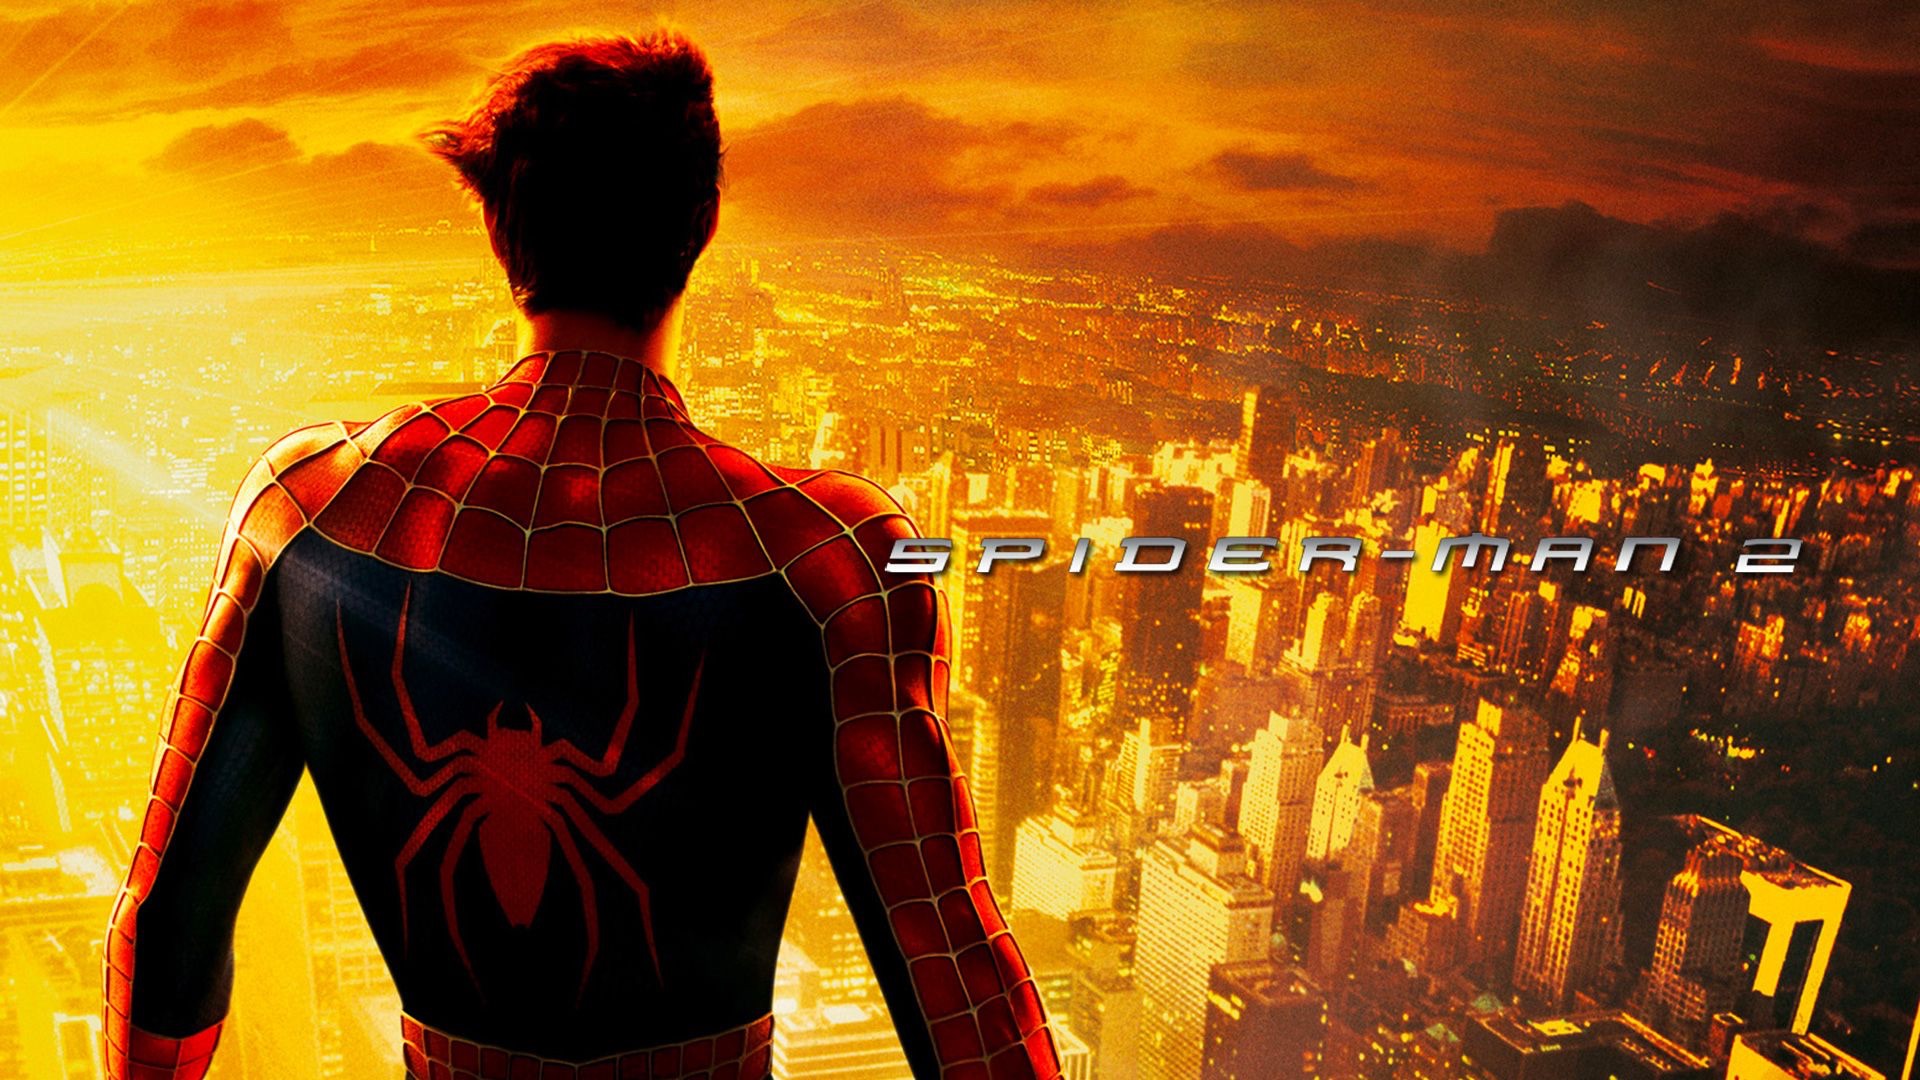 Descarga gratuita de fondo de pantalla para móvil de Películas, Spider Man 2, Hombre Araña, Spider Man, Peter Parker.